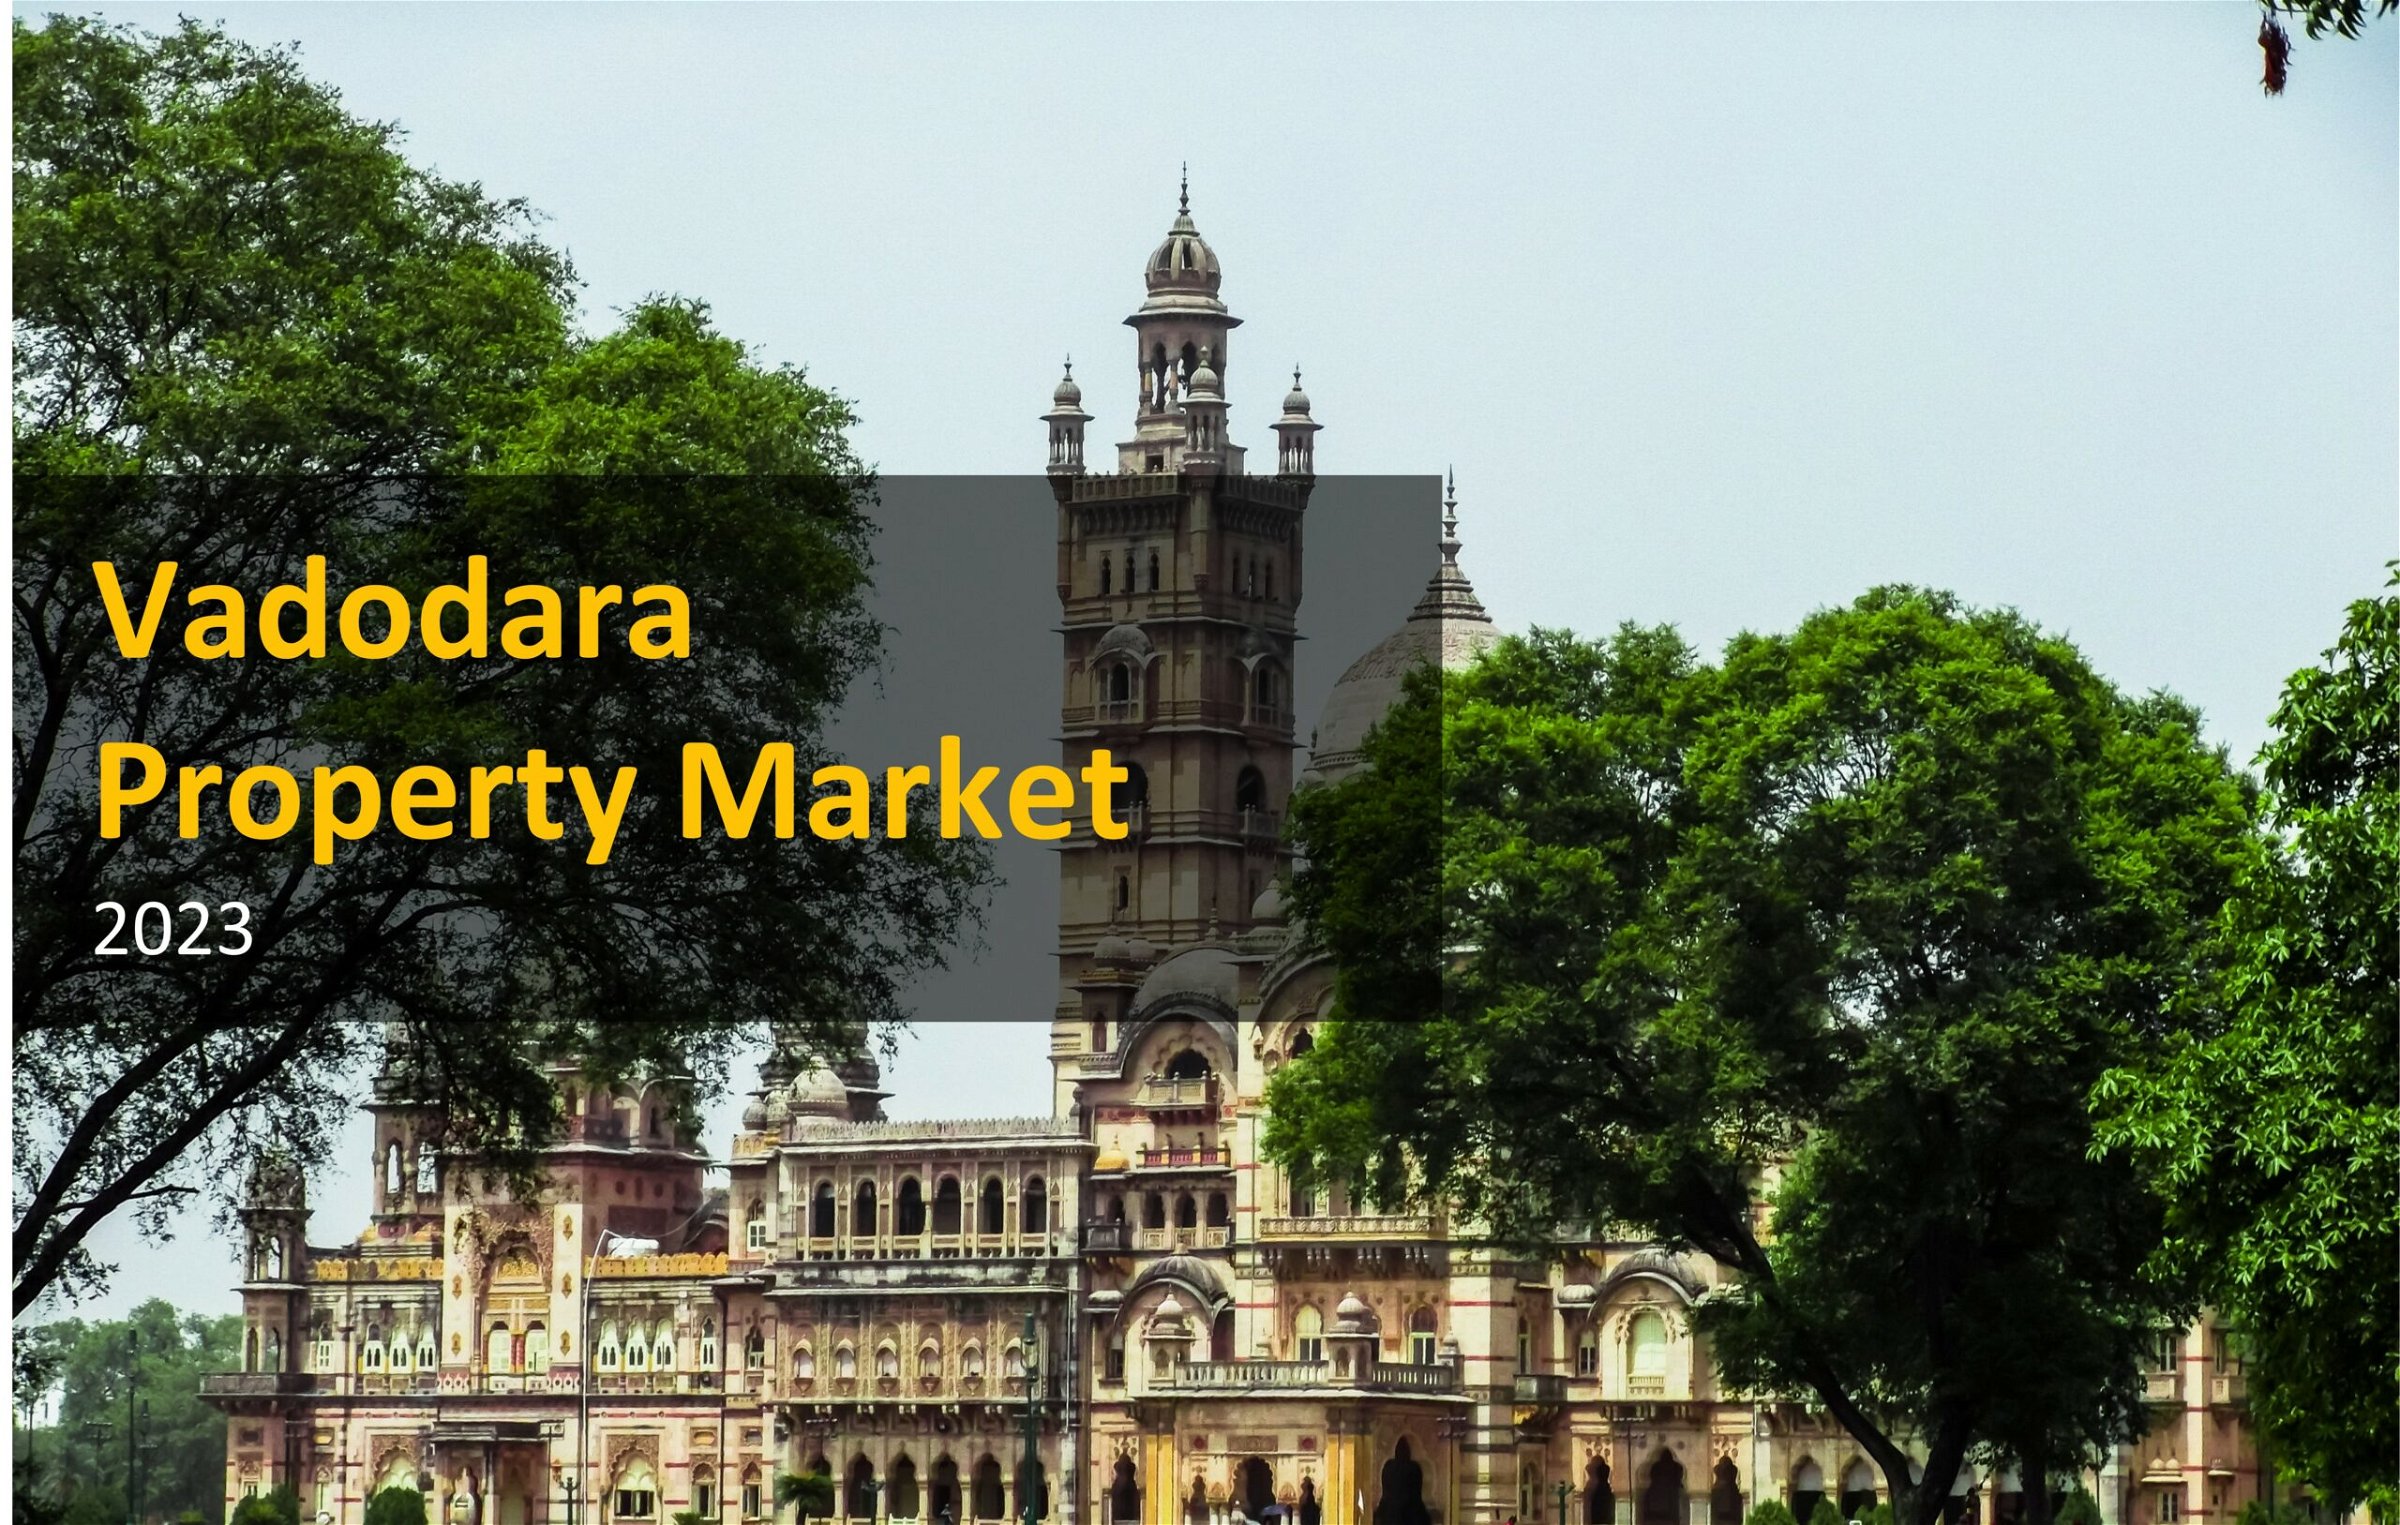 Vadodara trends amongst prominent Tier 2 cities of western India